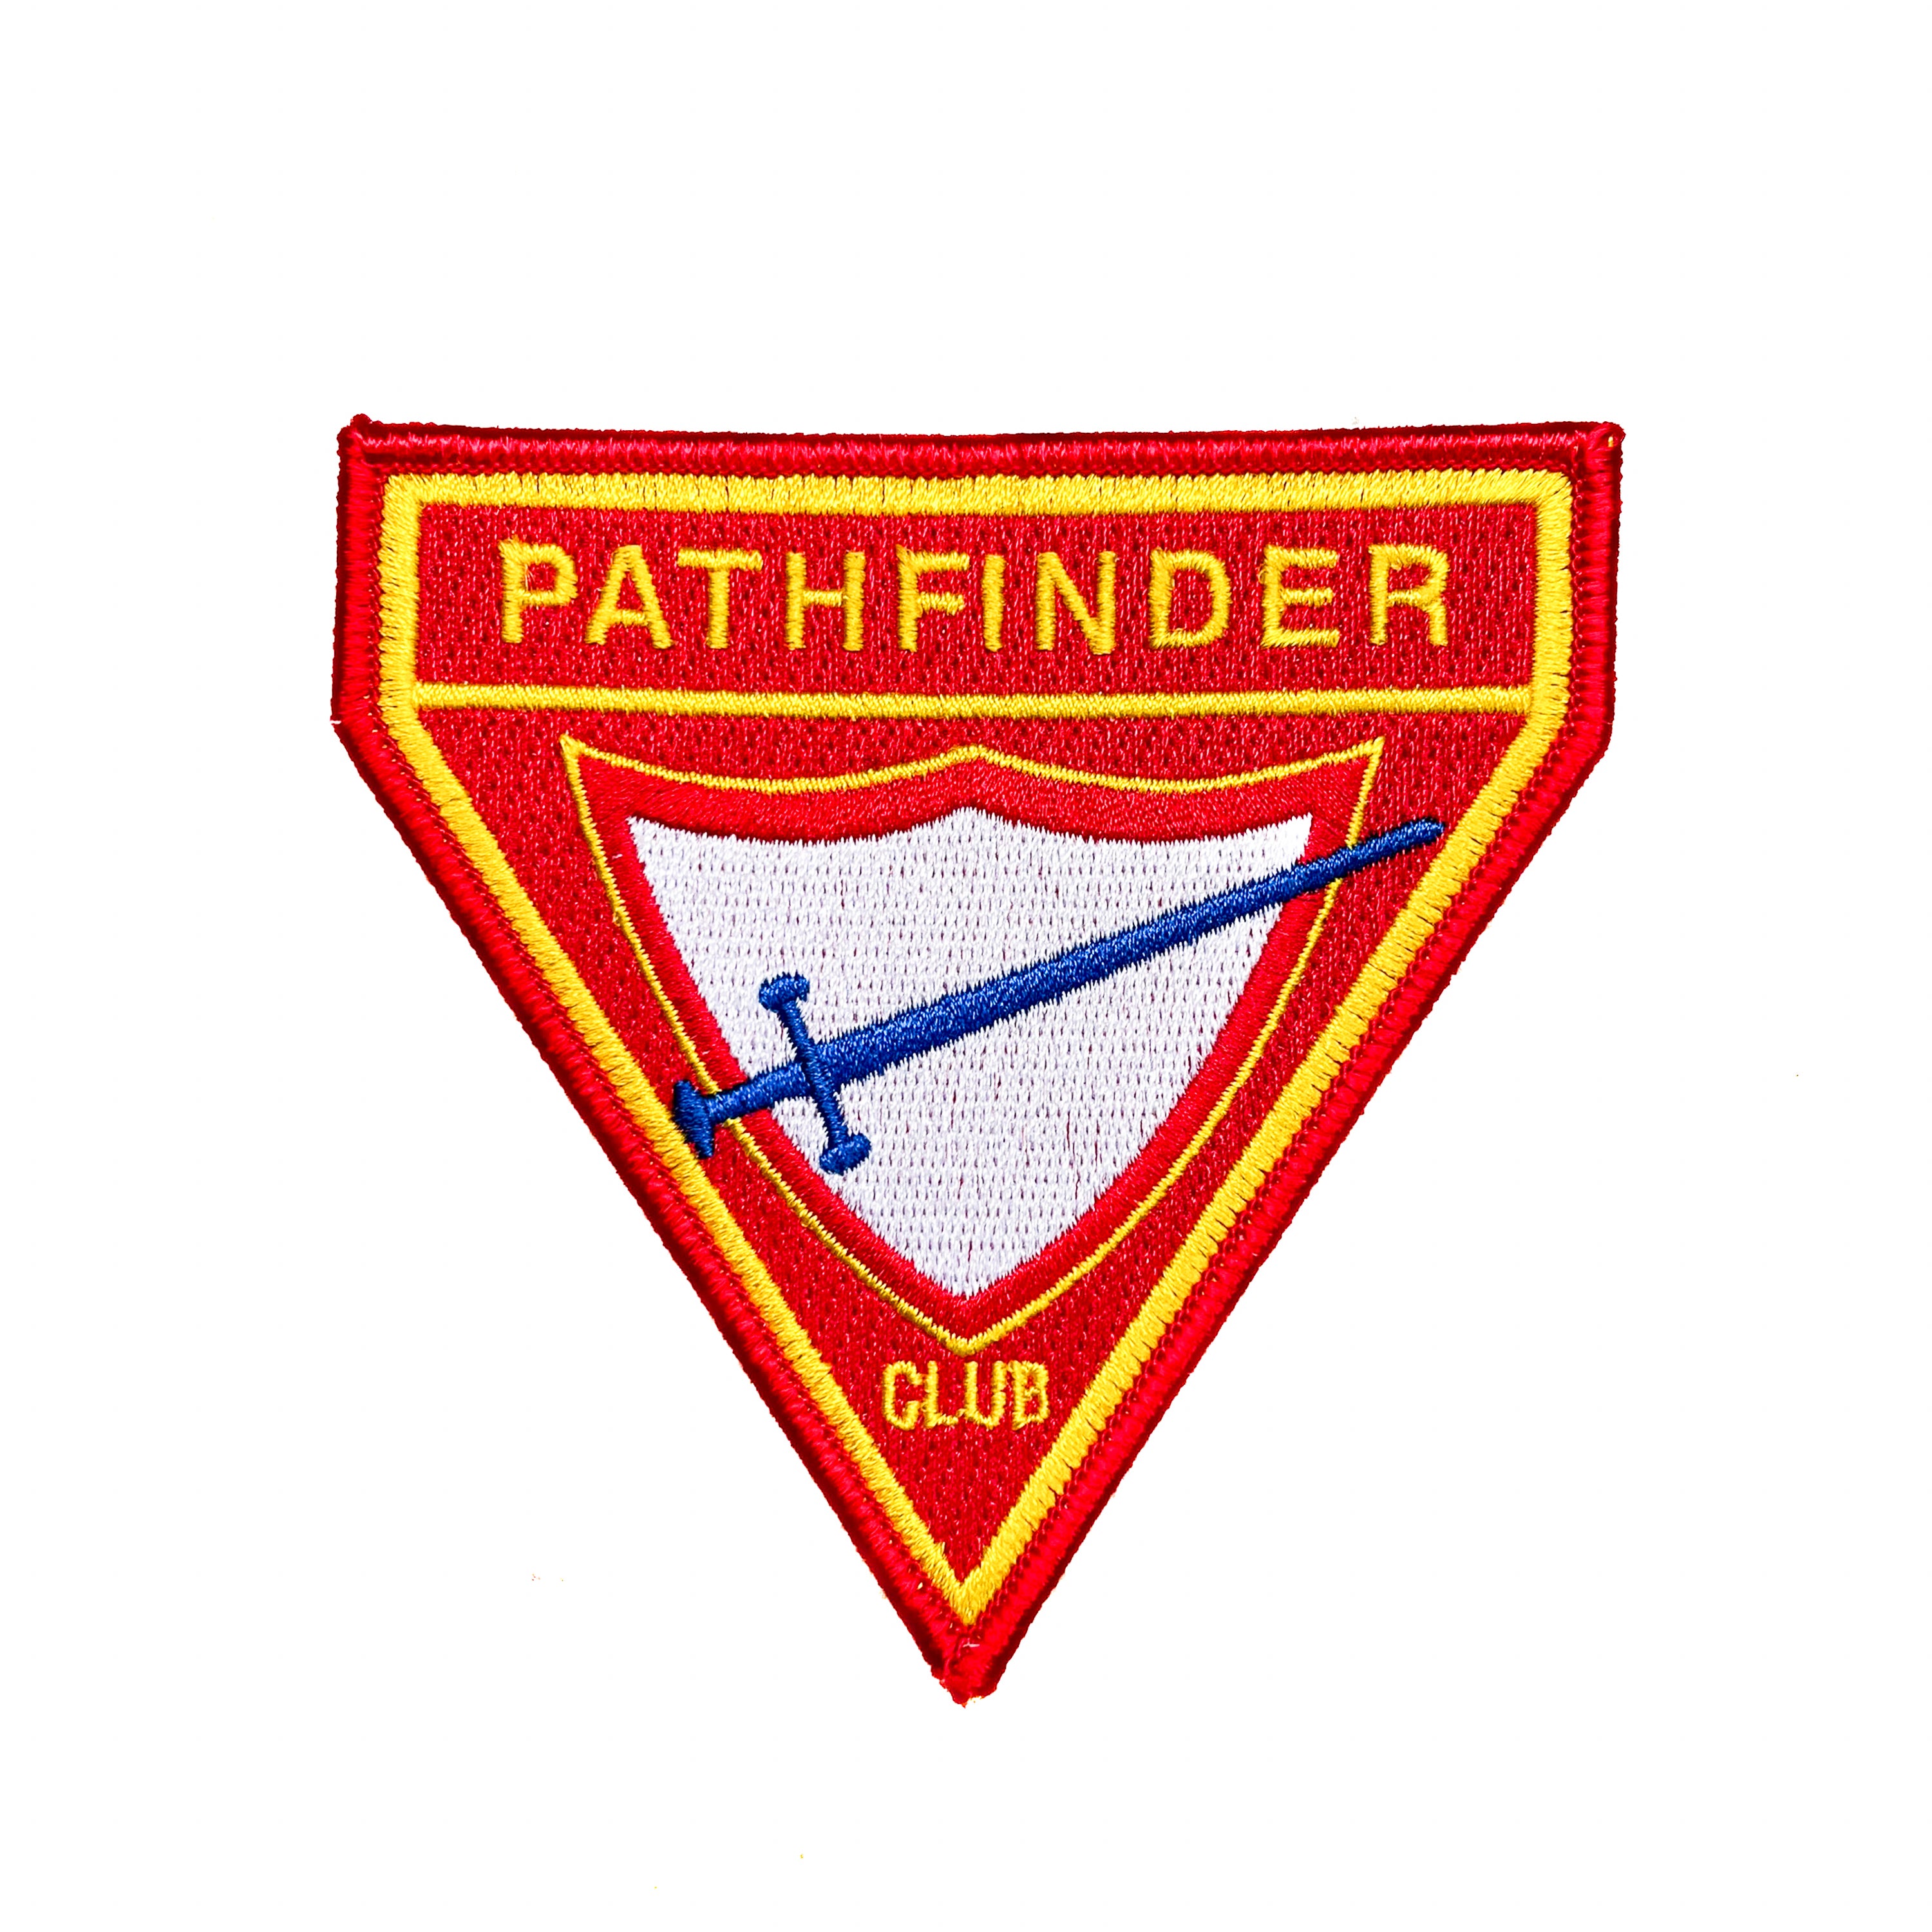 Pathfinder Club Patch